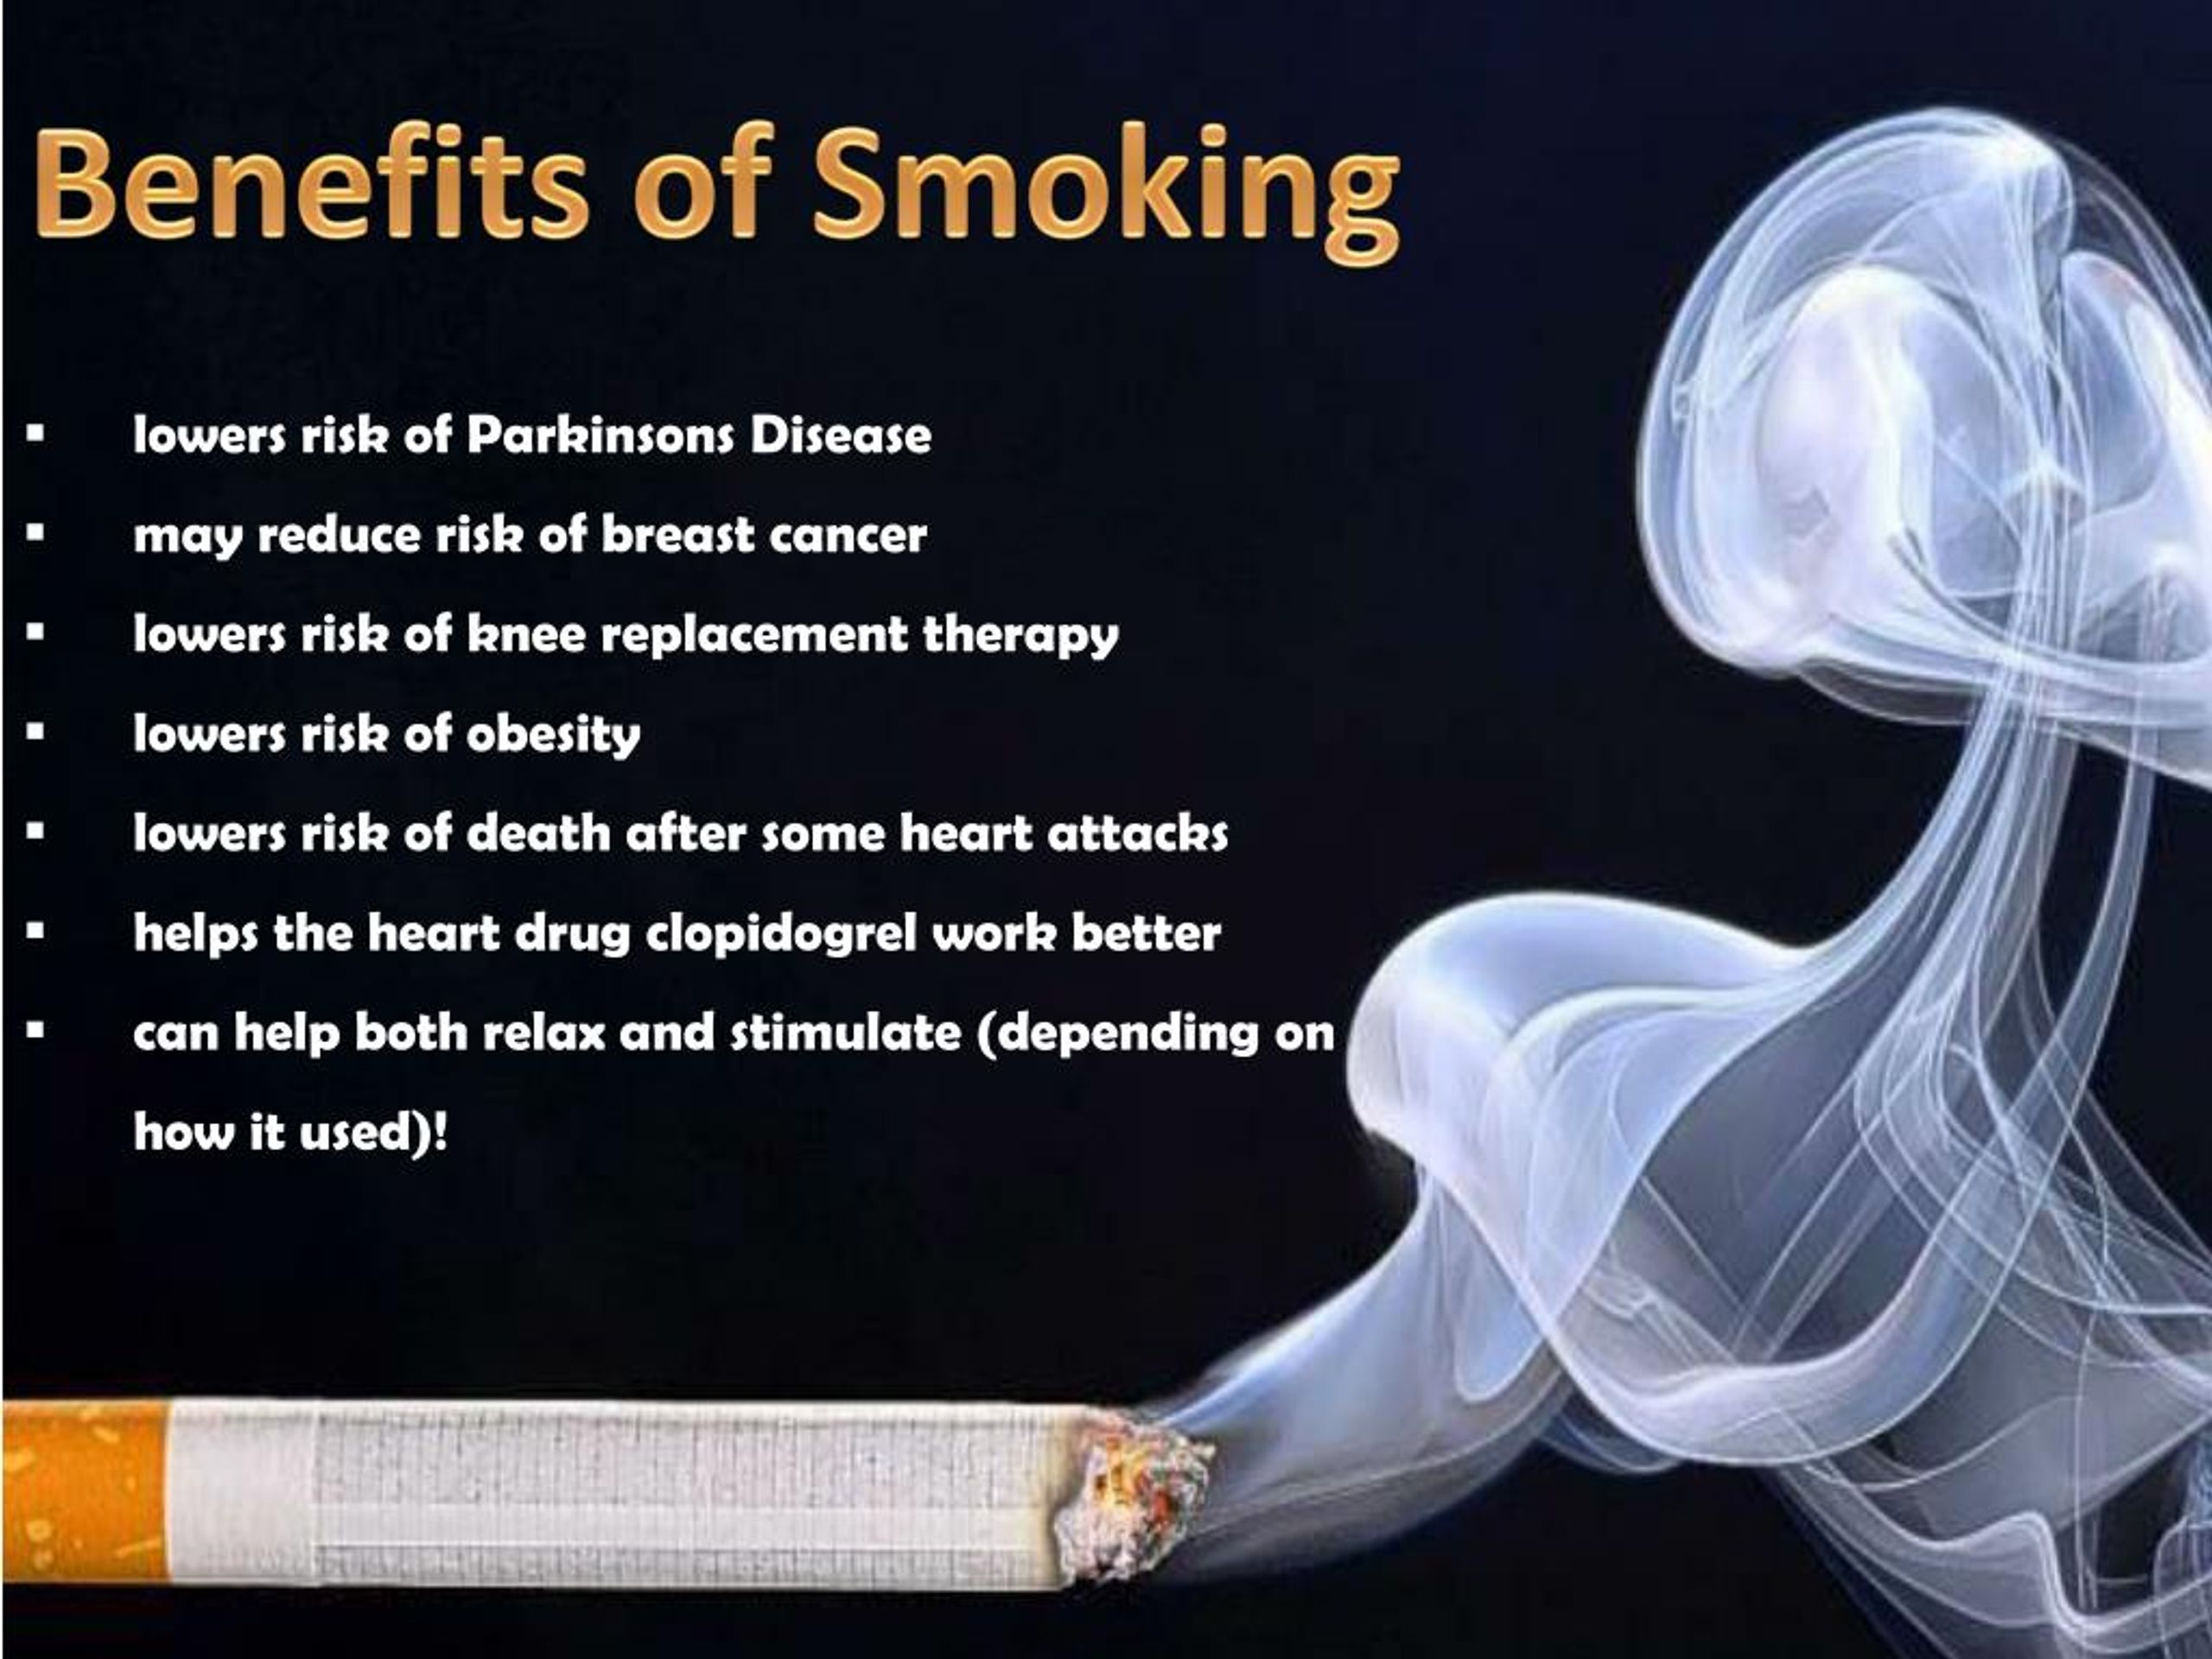 5 minutes presentation about smoking